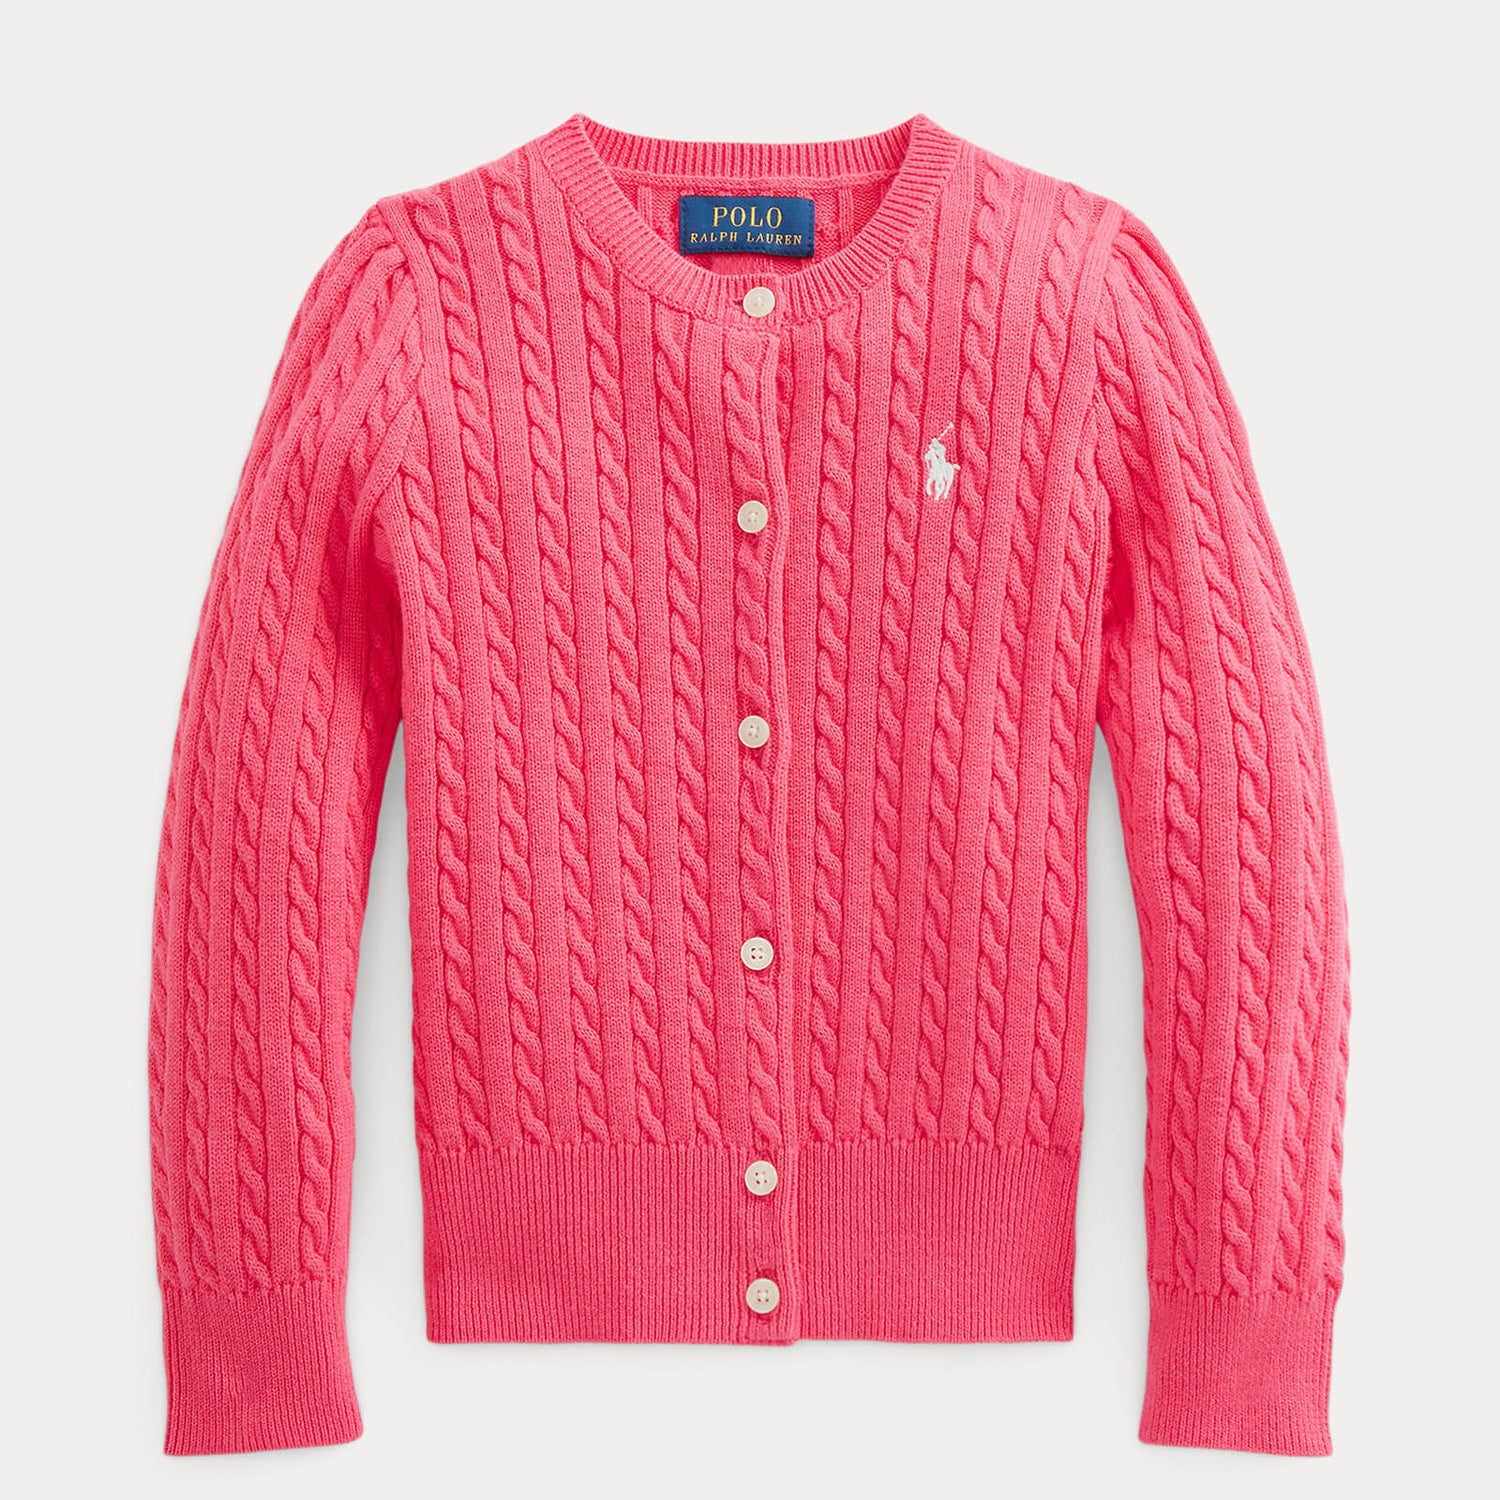 Ralph Lauren Girls' Cable Knit Cardigan - Hot Pink